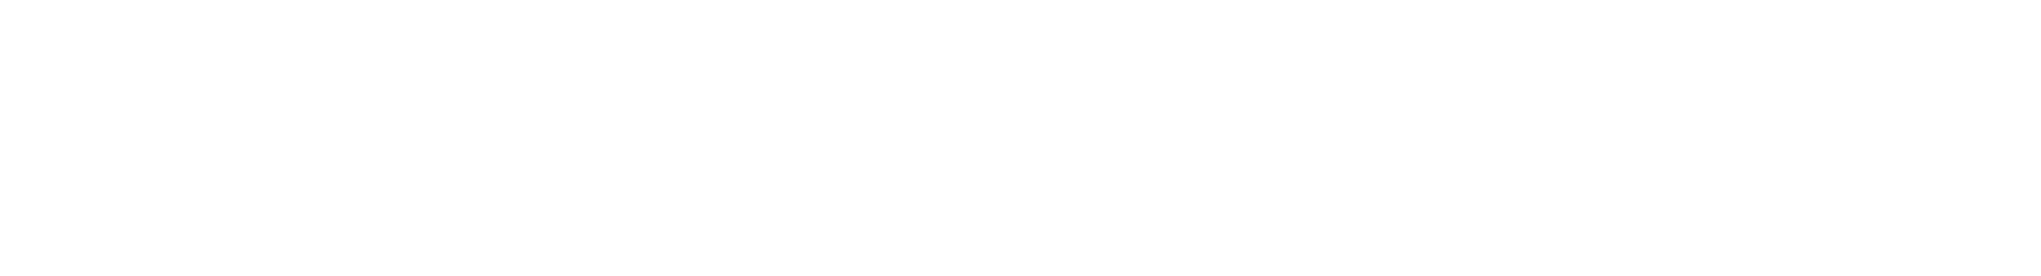 deepwatch-logo-white